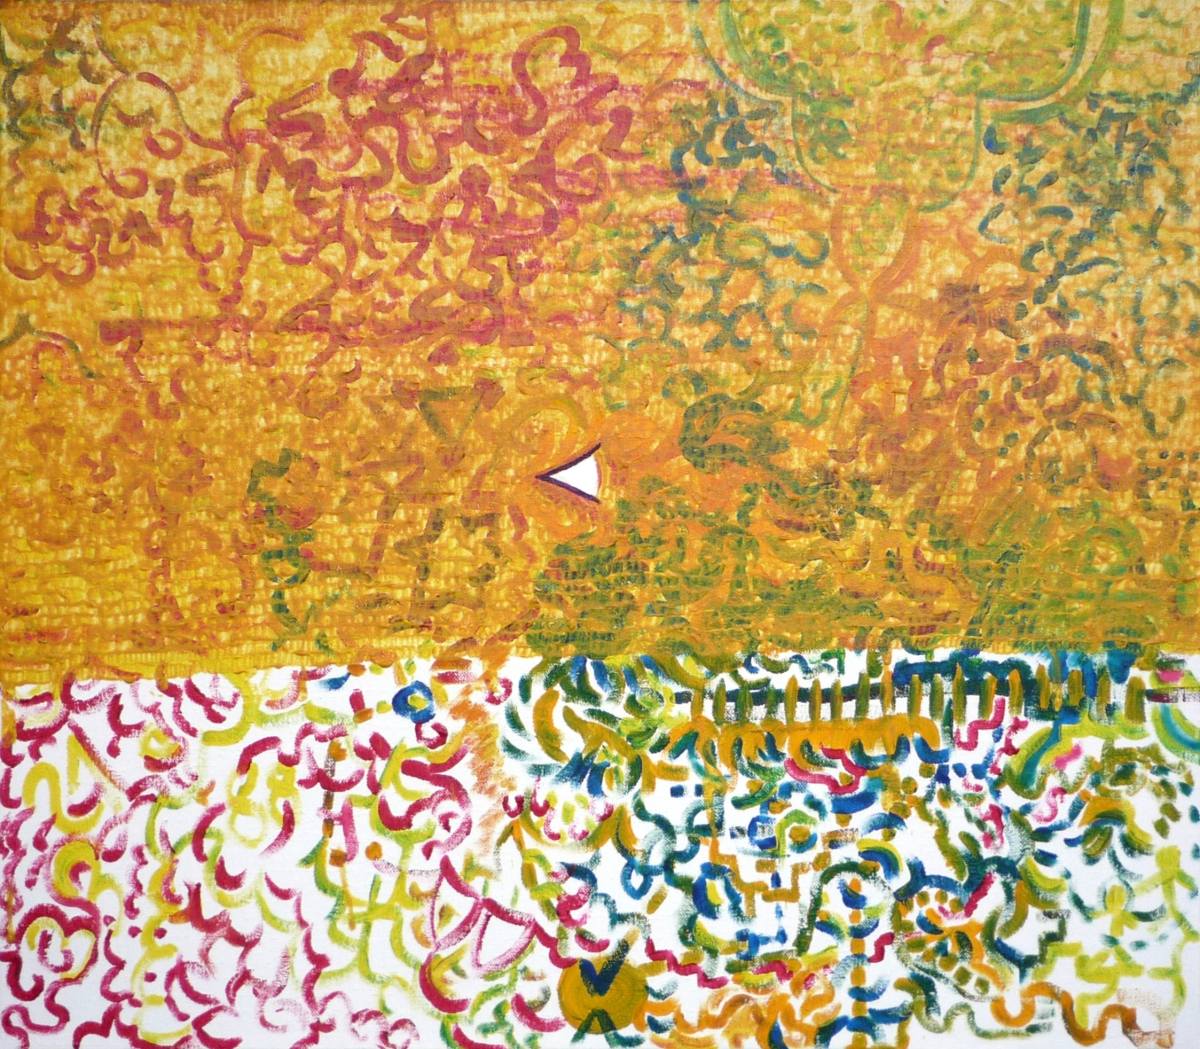 Jan Karpíšek: The Seeing, acryl on canvas, 70x80 cm, 2008